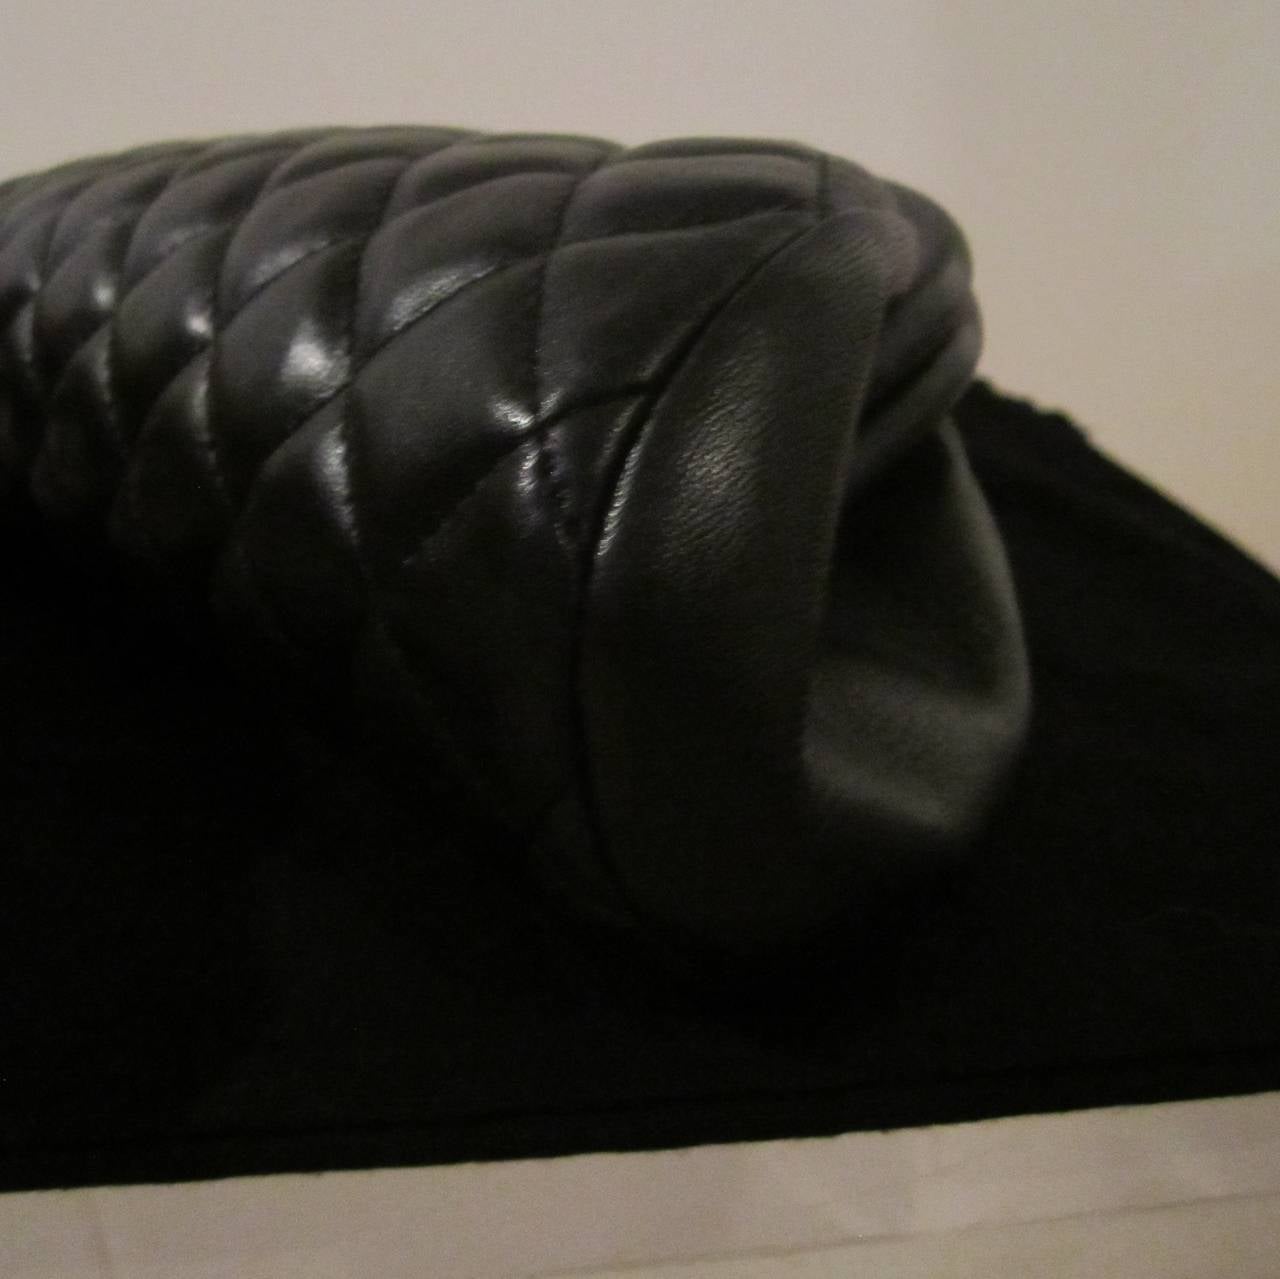 Authentic Chanel Black Leather Classic Clutch Handbag 2